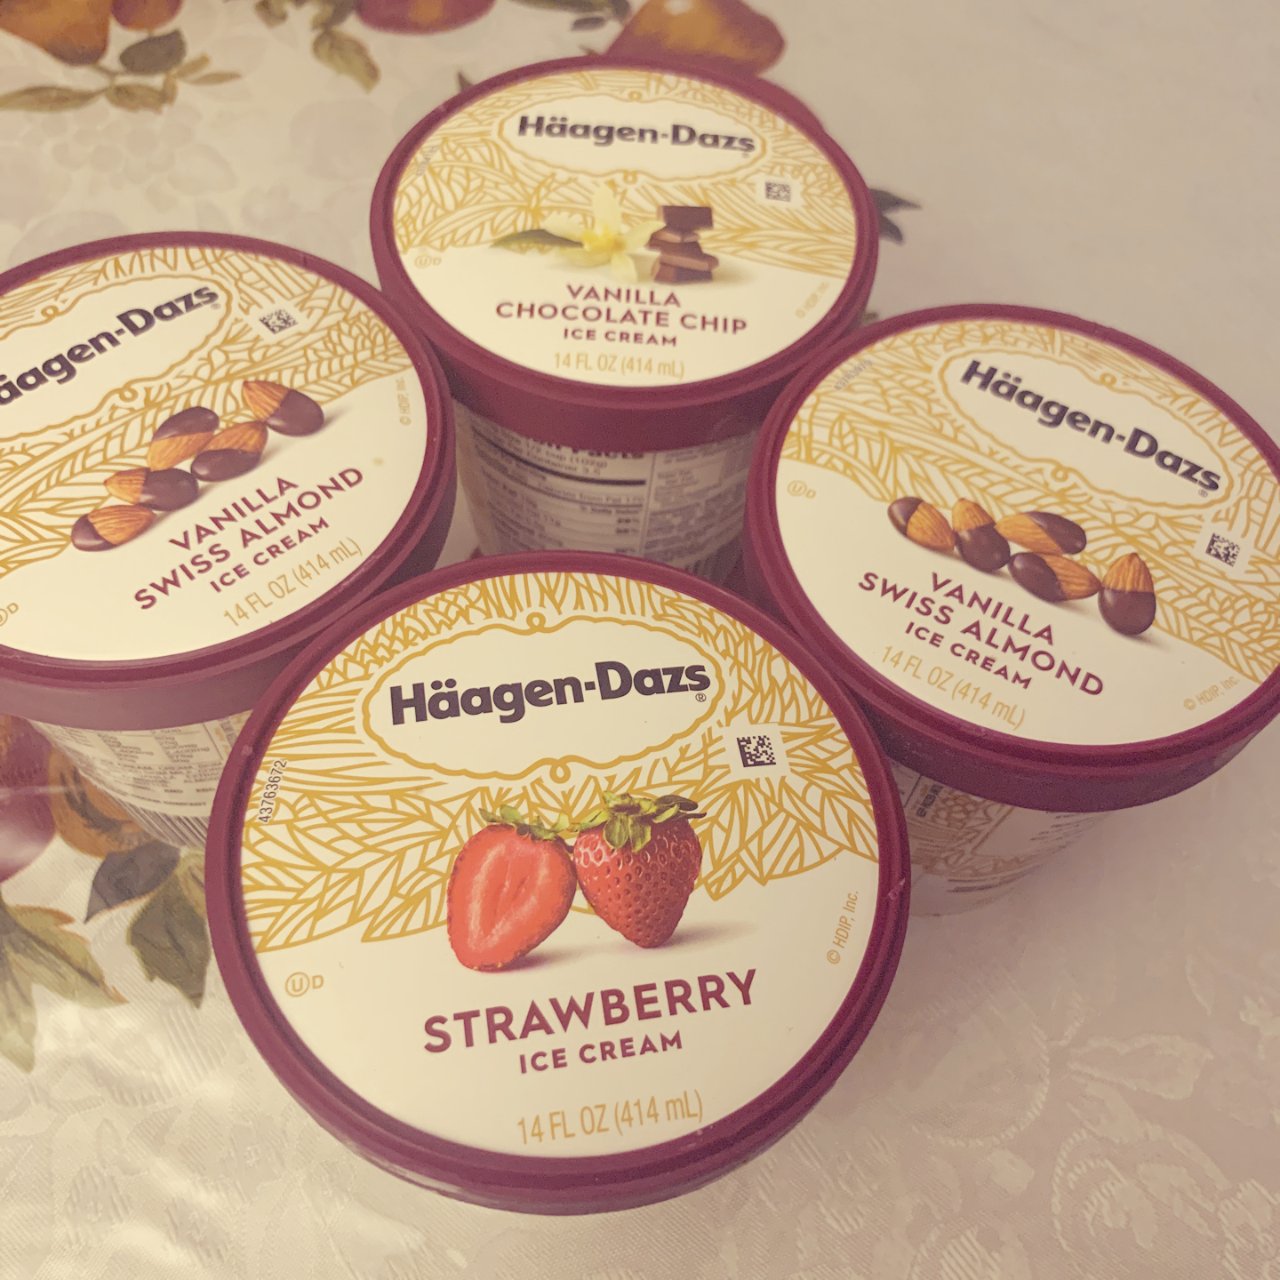 Haagen Dazs 哈根达斯,giant supermarket,Vanilla Swiss Almond Ice Cream,Strawberry,冰激凌,ice cream